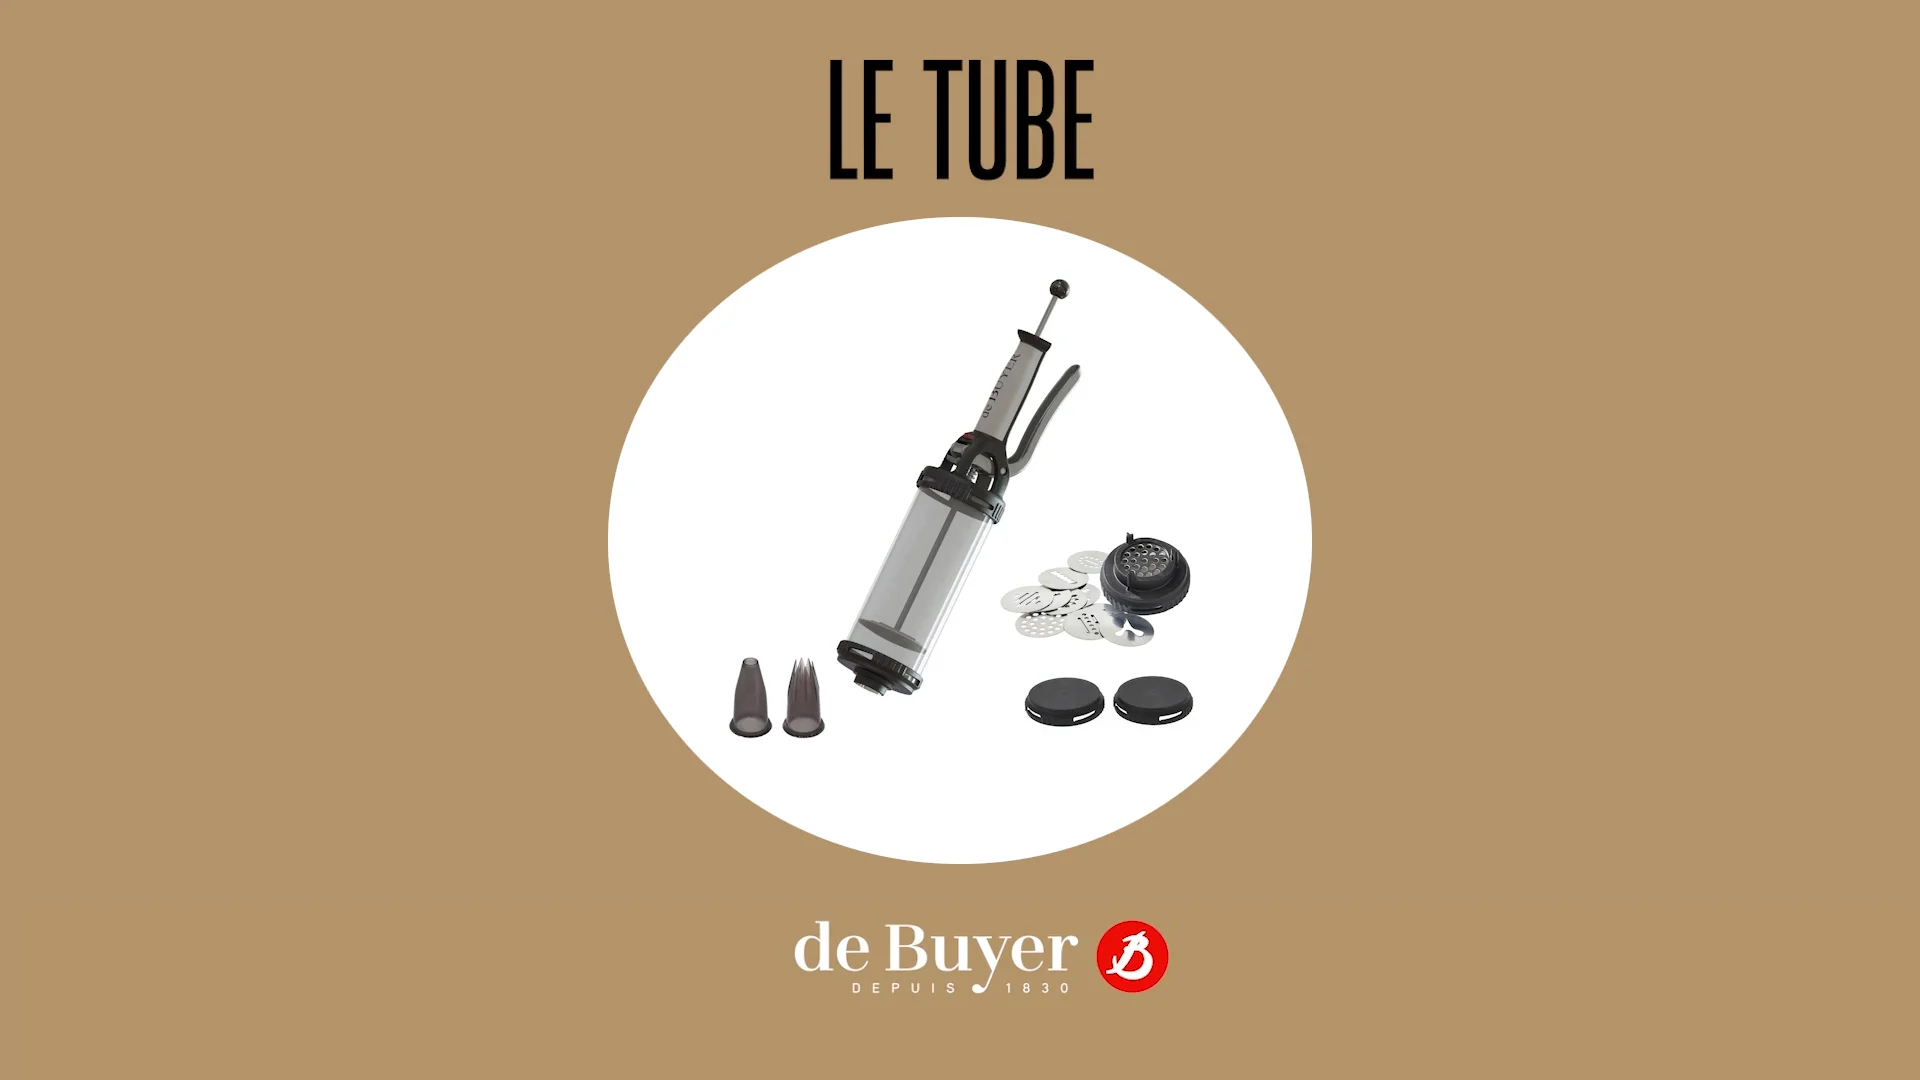 de Buyer - Le Tube : piston à pression - Notice d'utilisation -  Instructions for use - Gebrauchsanweisung on Vimeo